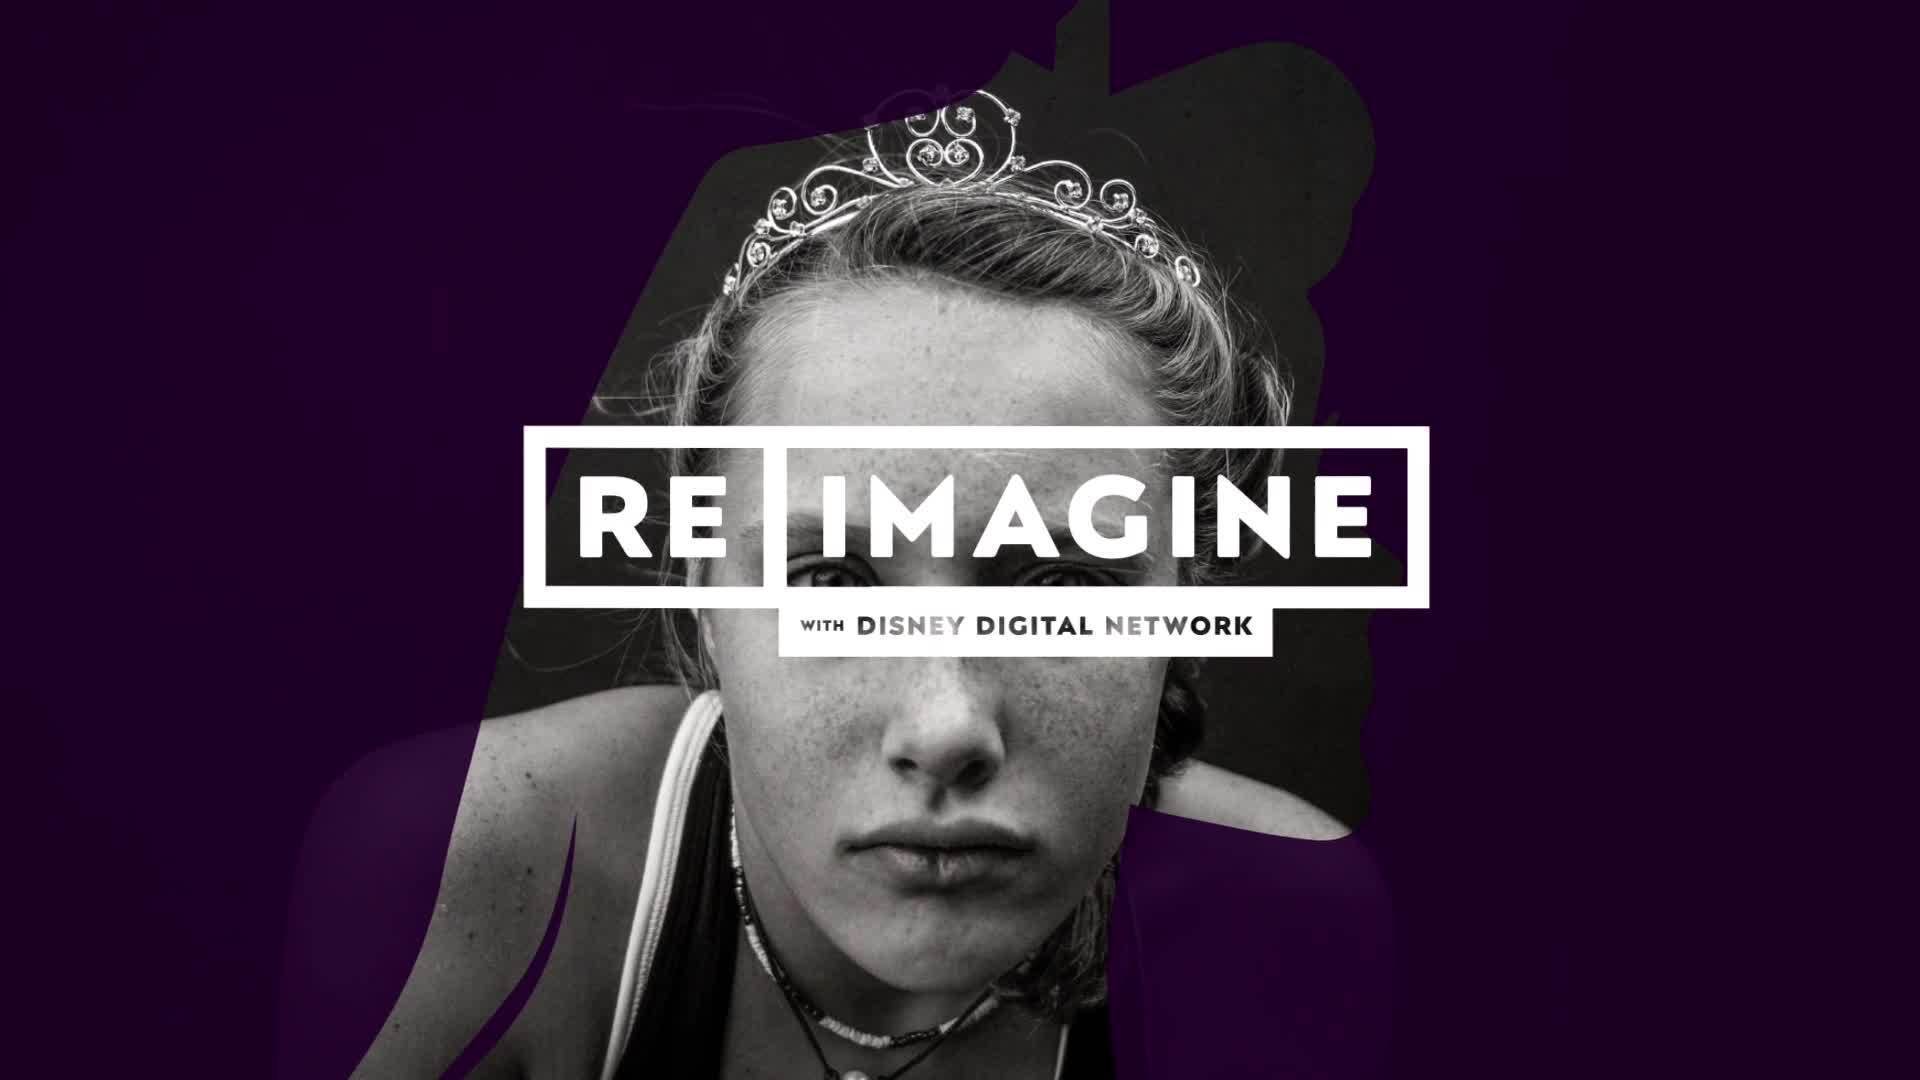 Reimagine with Disney Digital Network